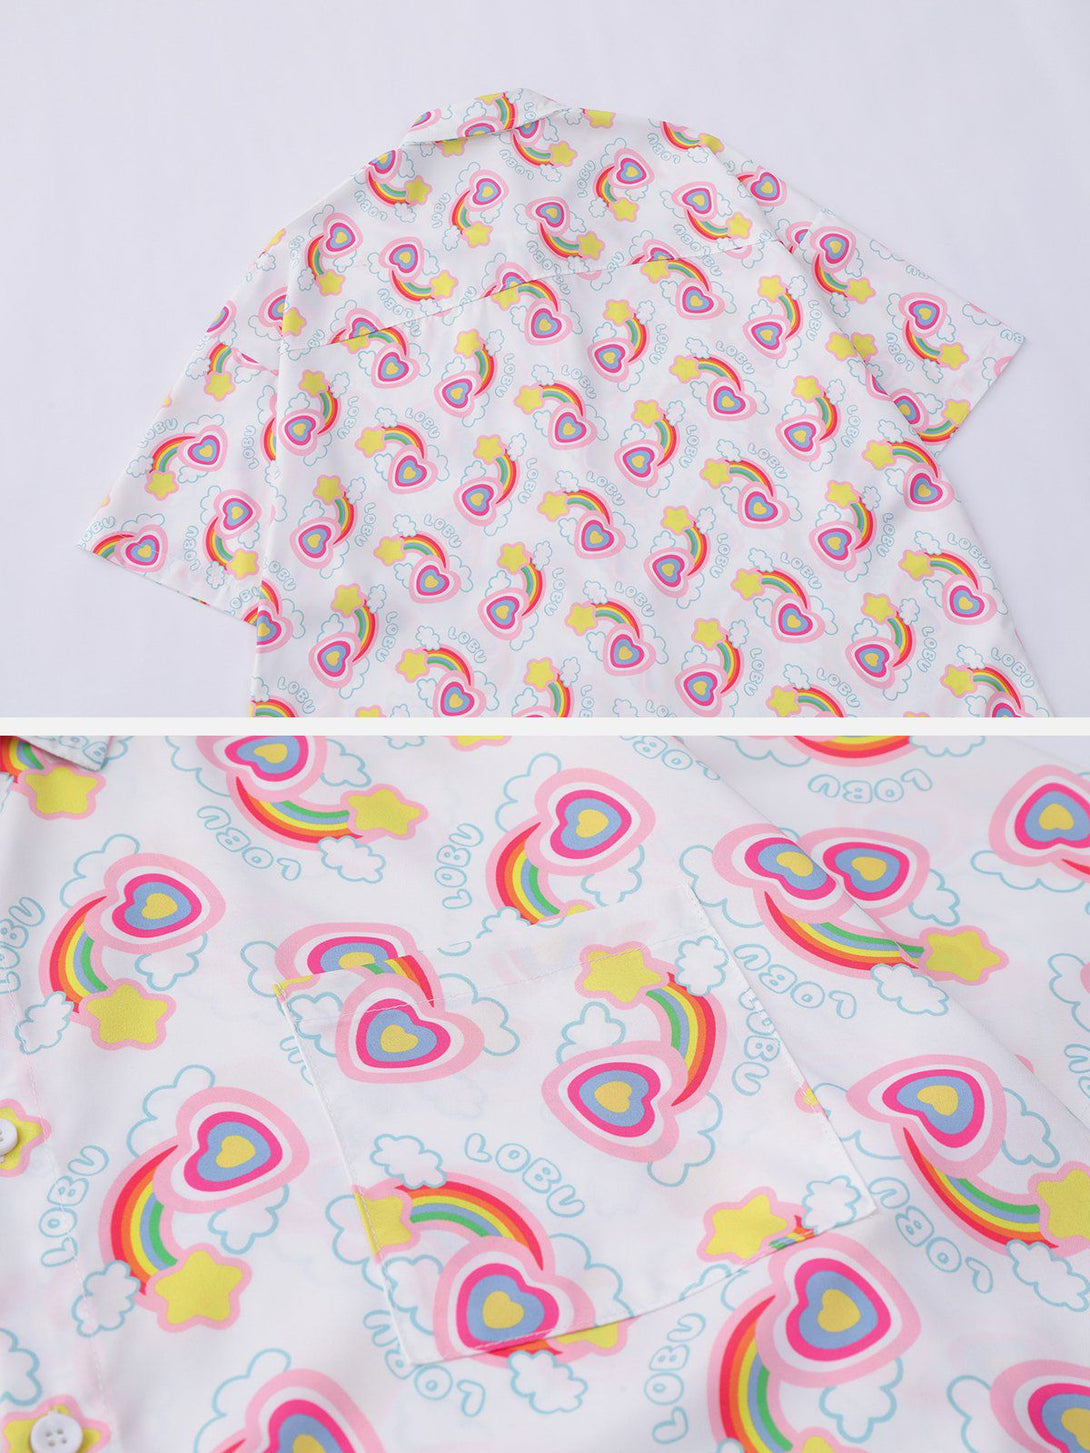 Majesda® - Rainbow Love Print Short Sleeve Shirts outfit ideas streetwear fashion